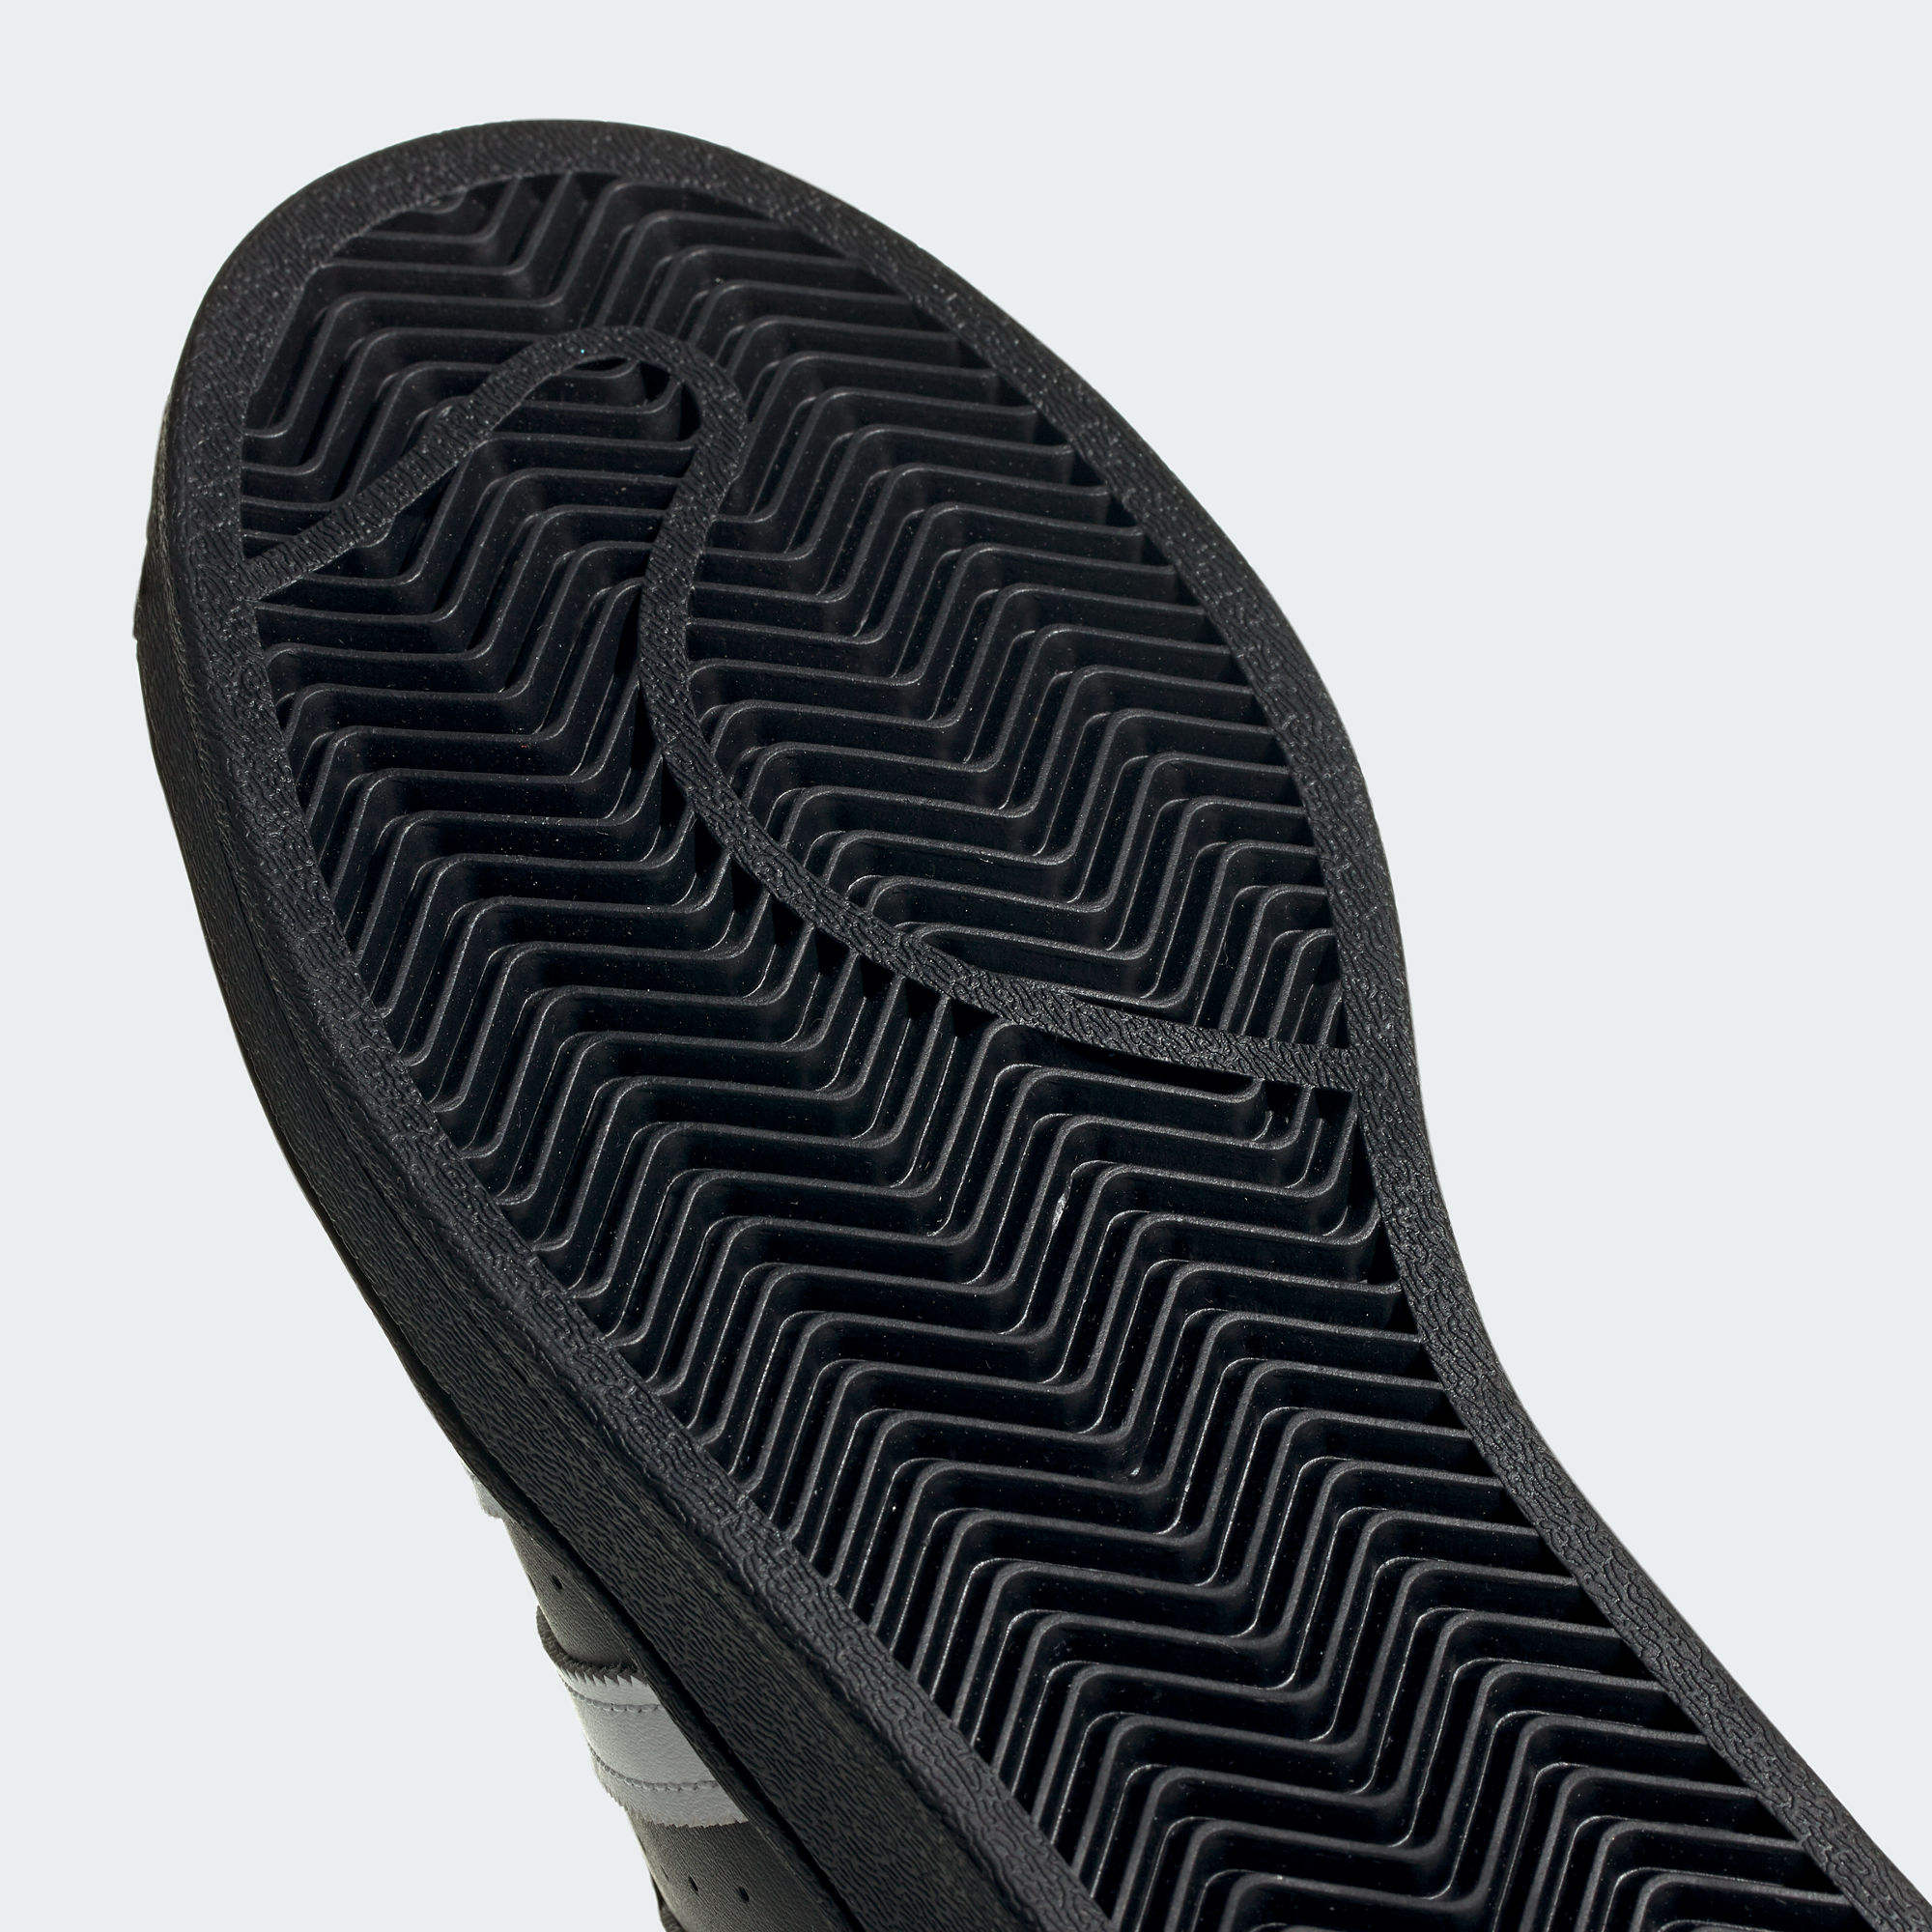 SUPERSTAR 運動鞋- 黑色| 男子| adidas(愛迪達)香港官方網上商店